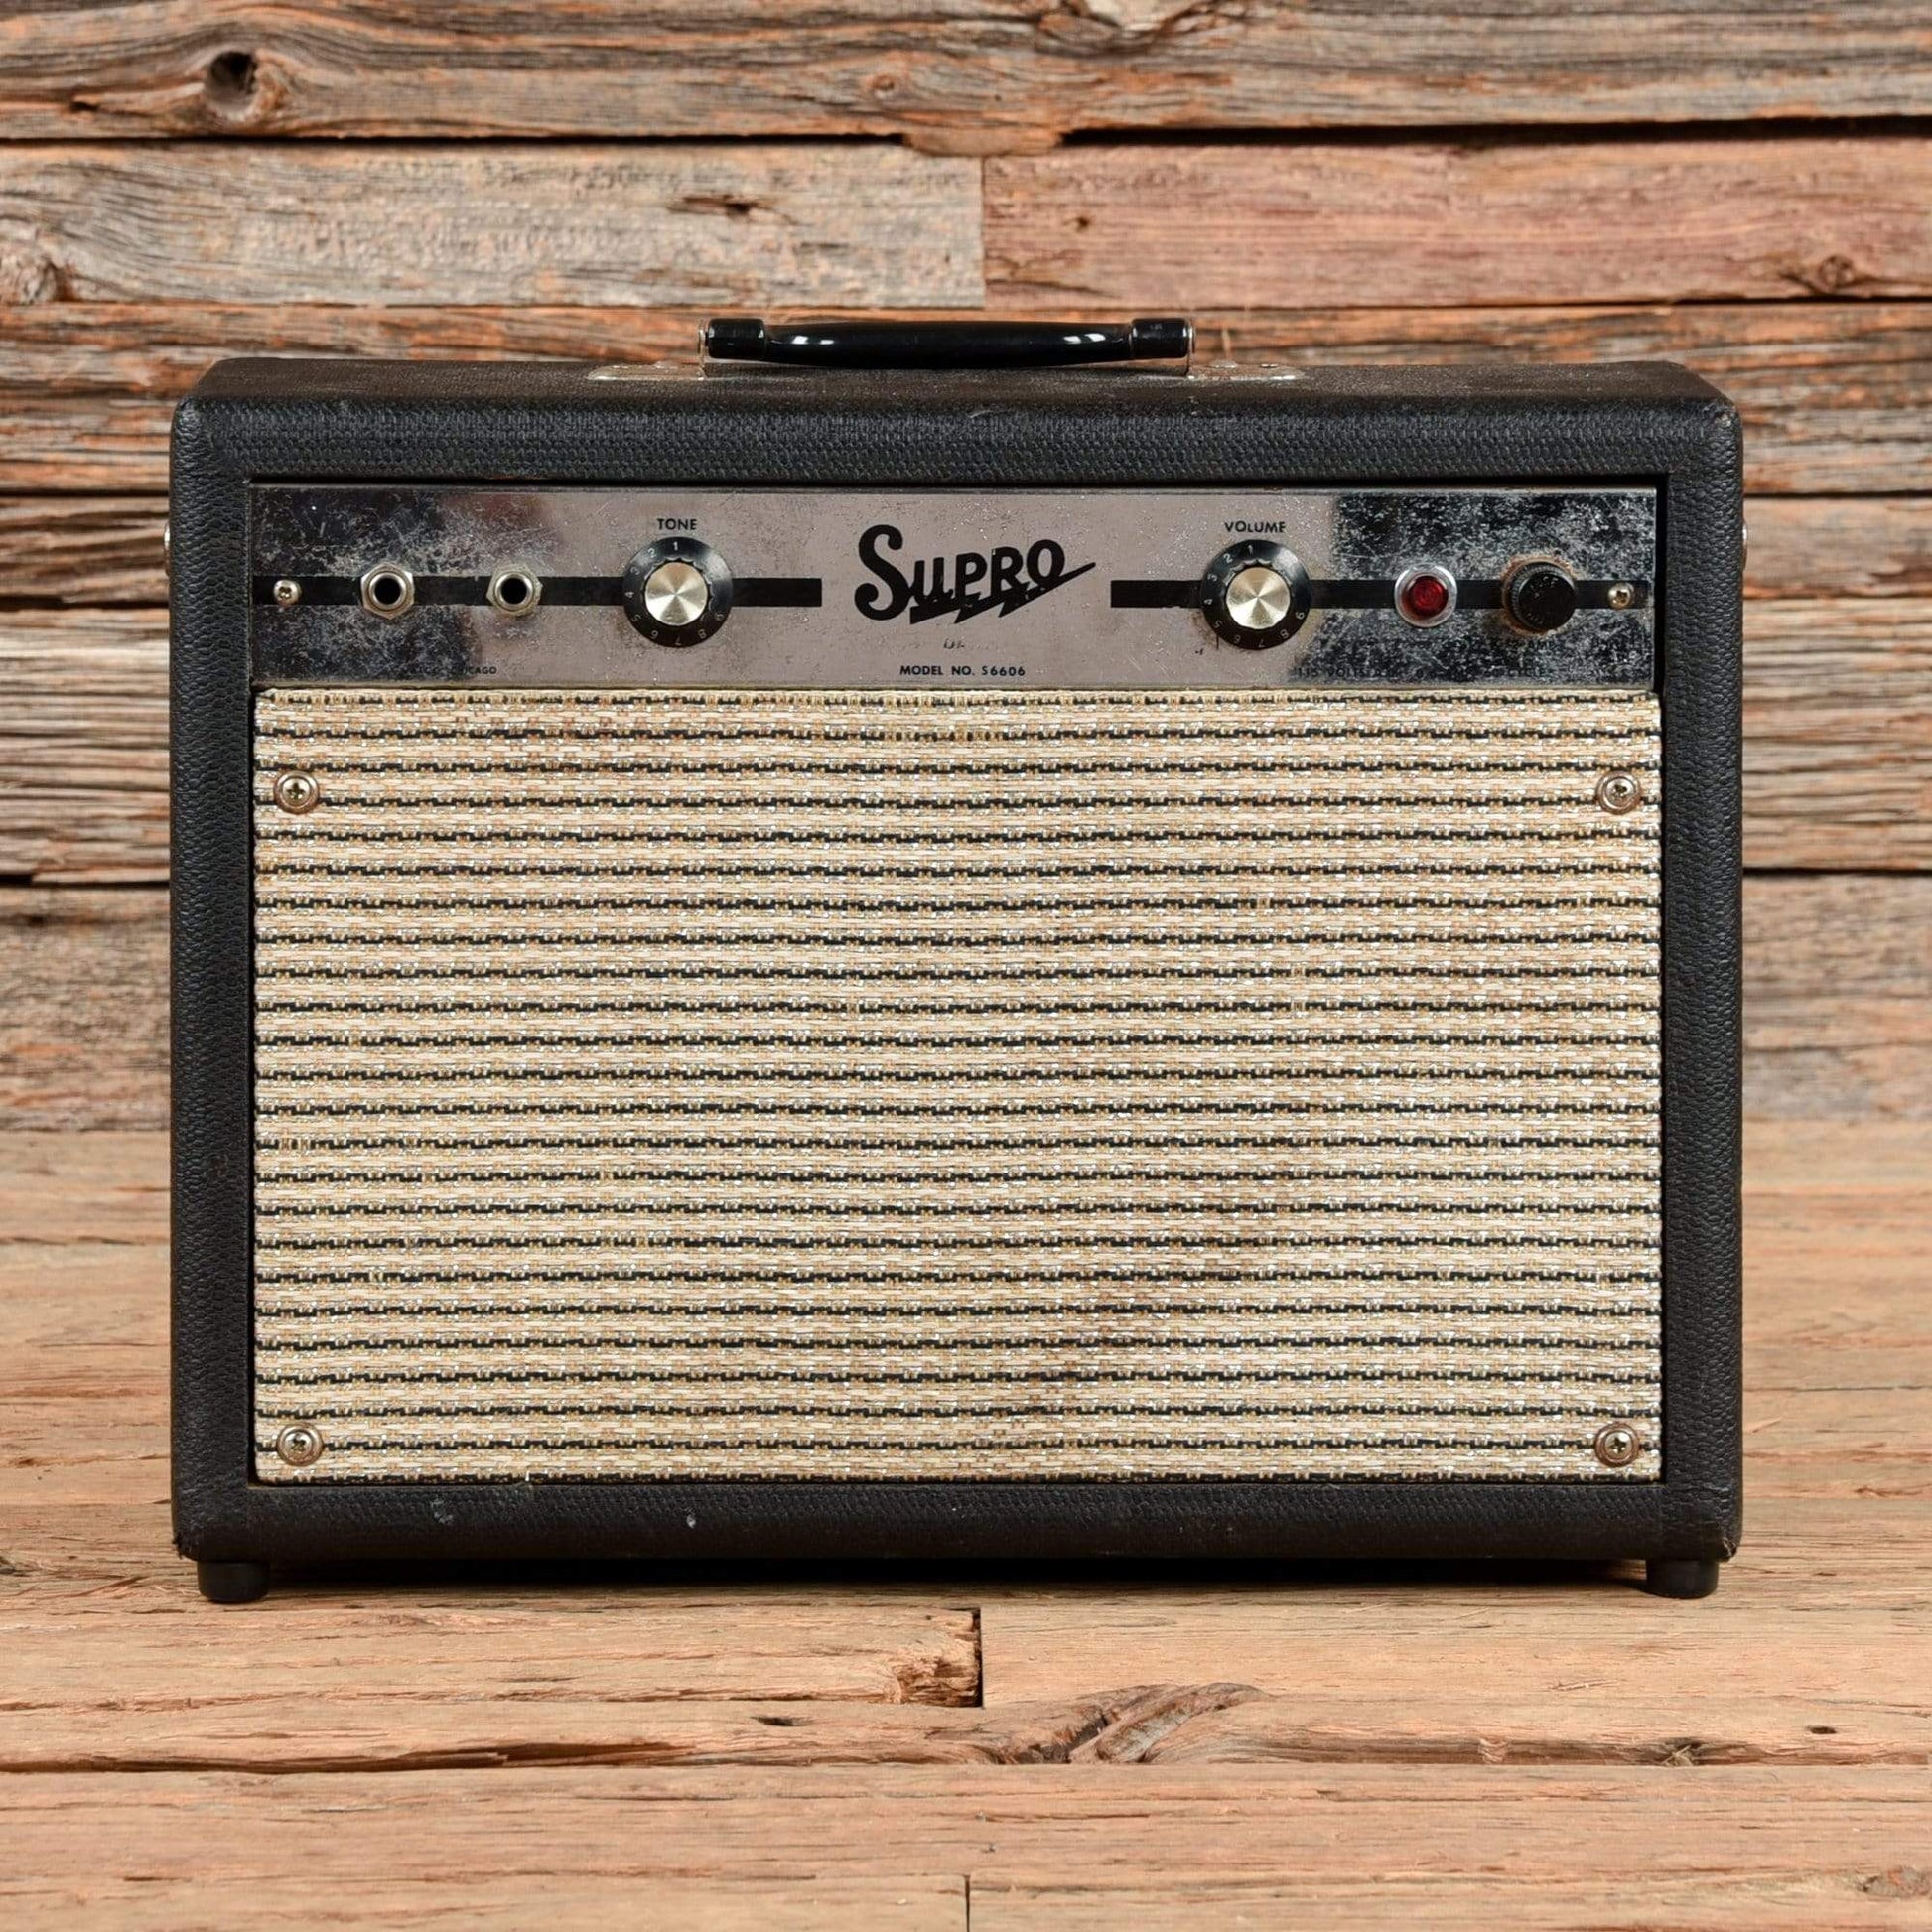 Supro Super 6  1967 Amps / Guitar Combos